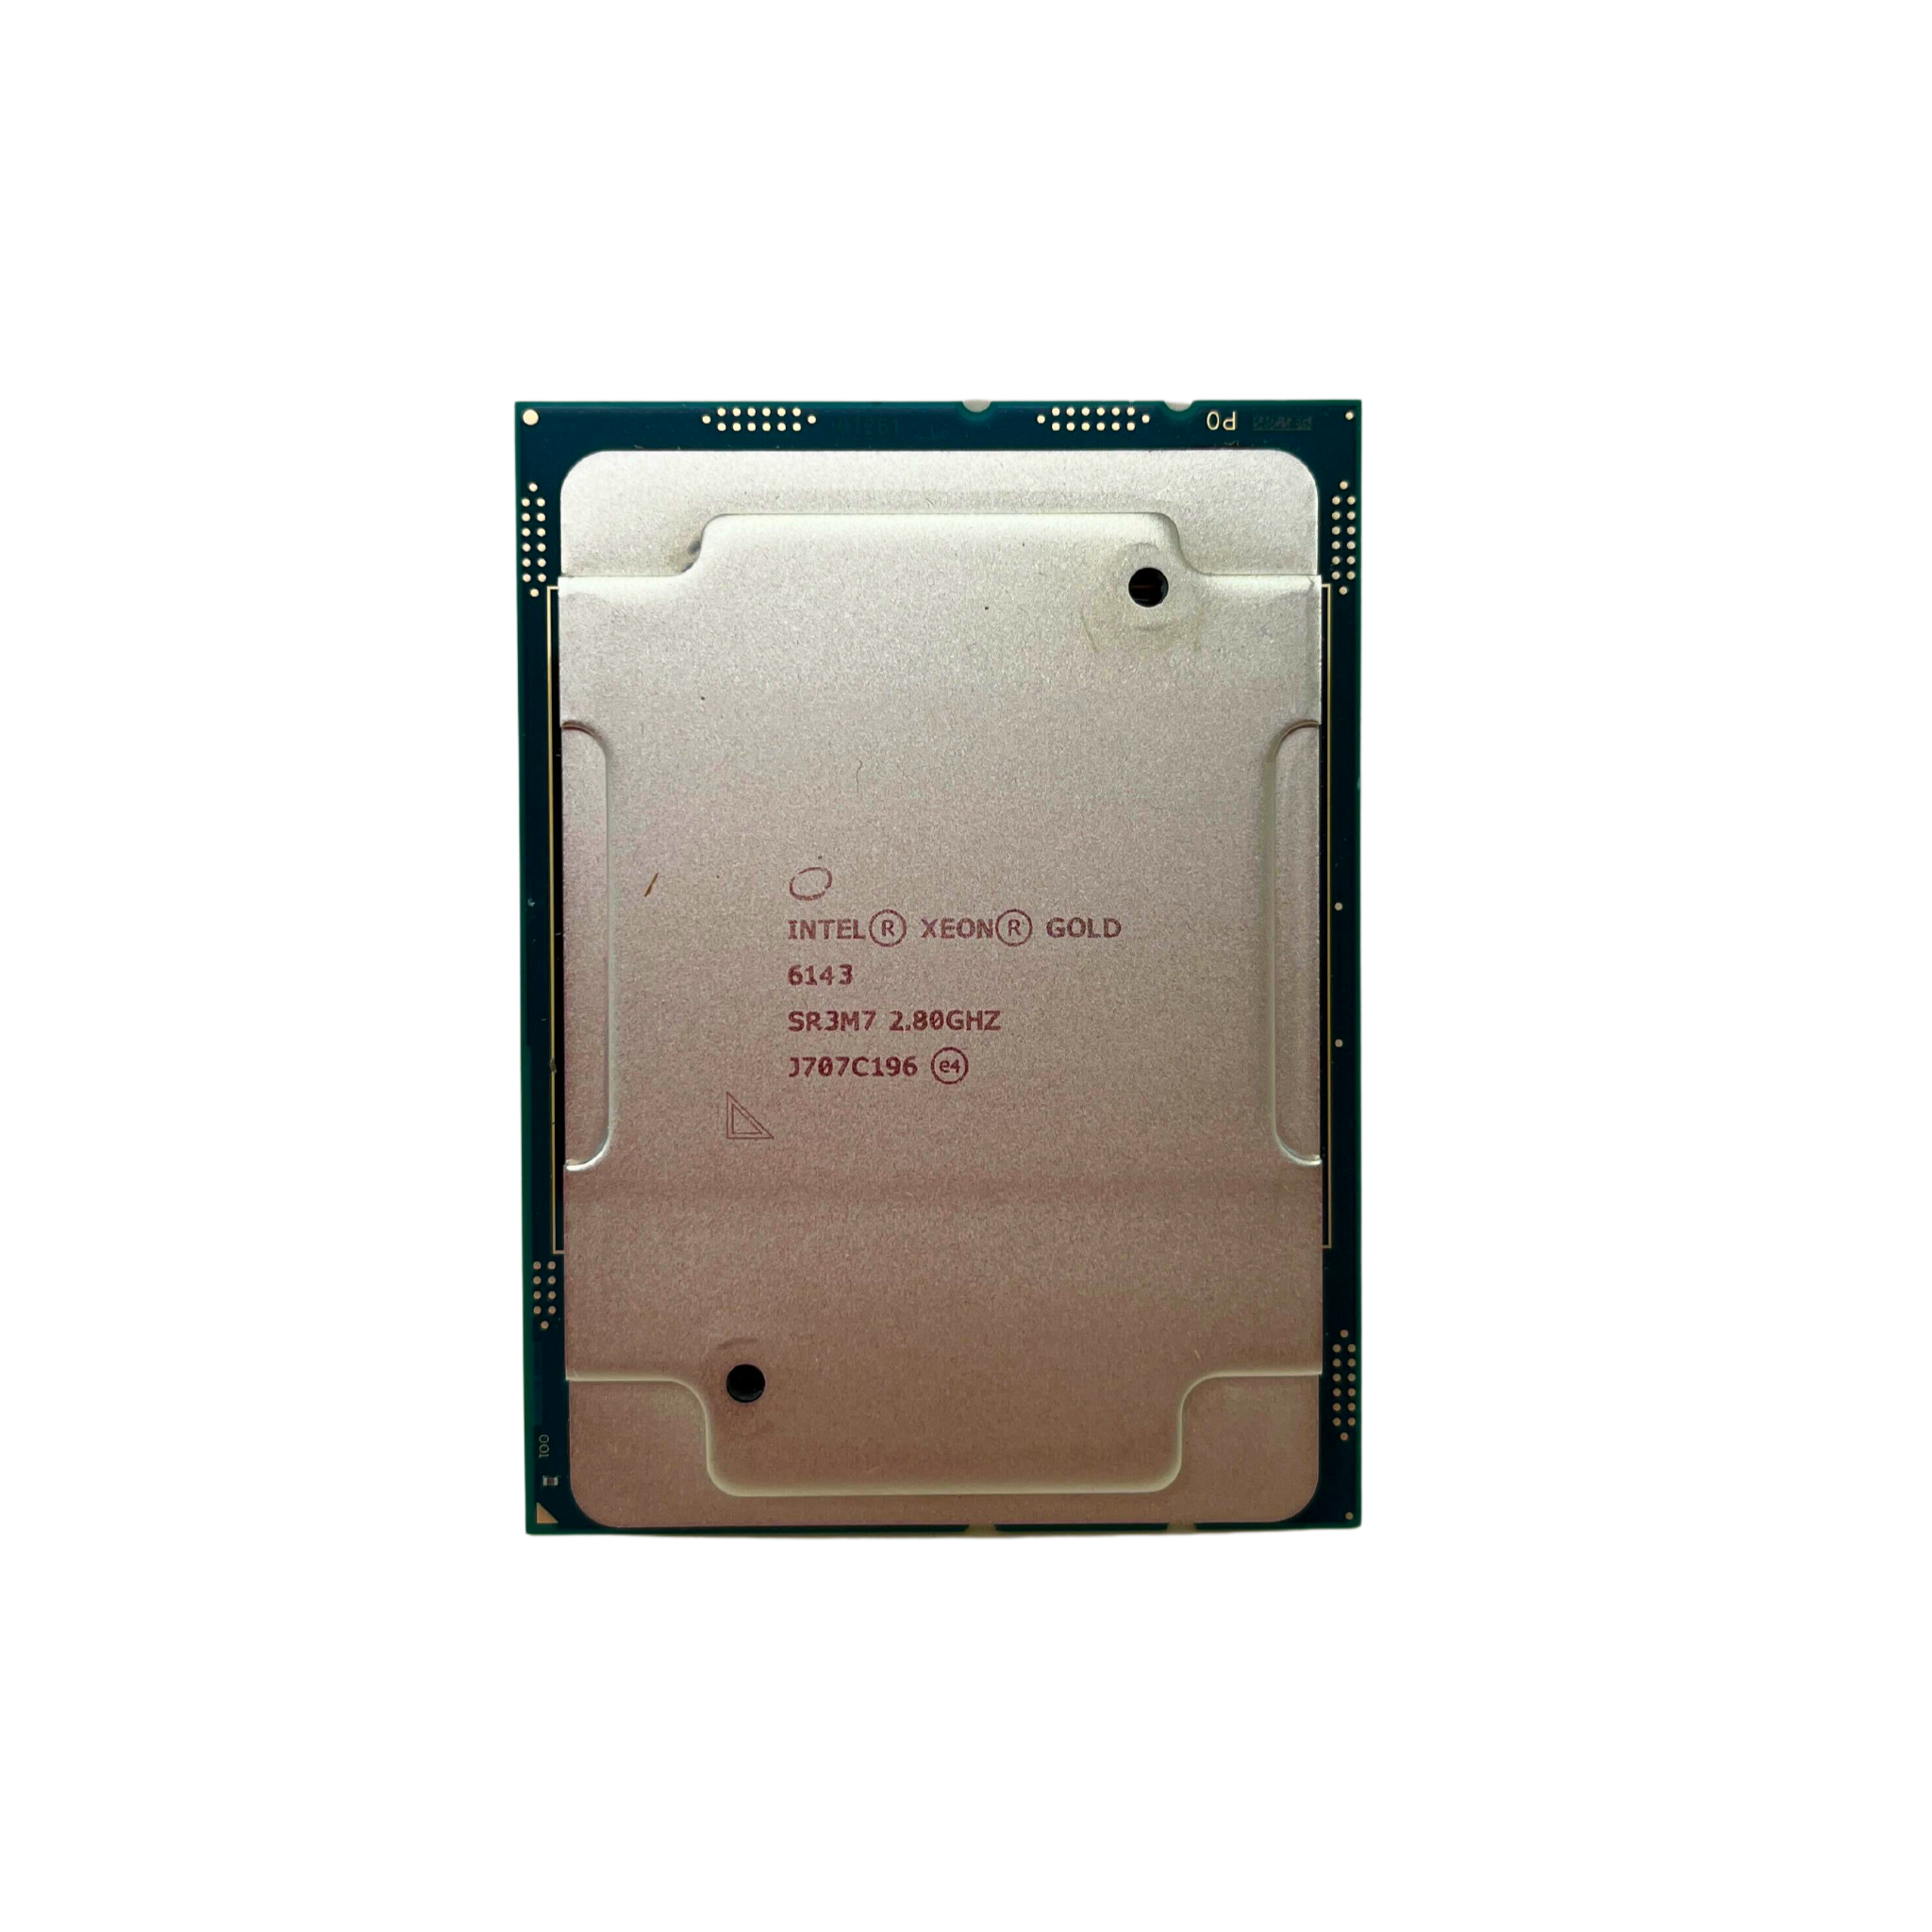 Intel Xeon Gold 6143 2.8ghz 22mb 16 Core CPU Processor (SR3M7)